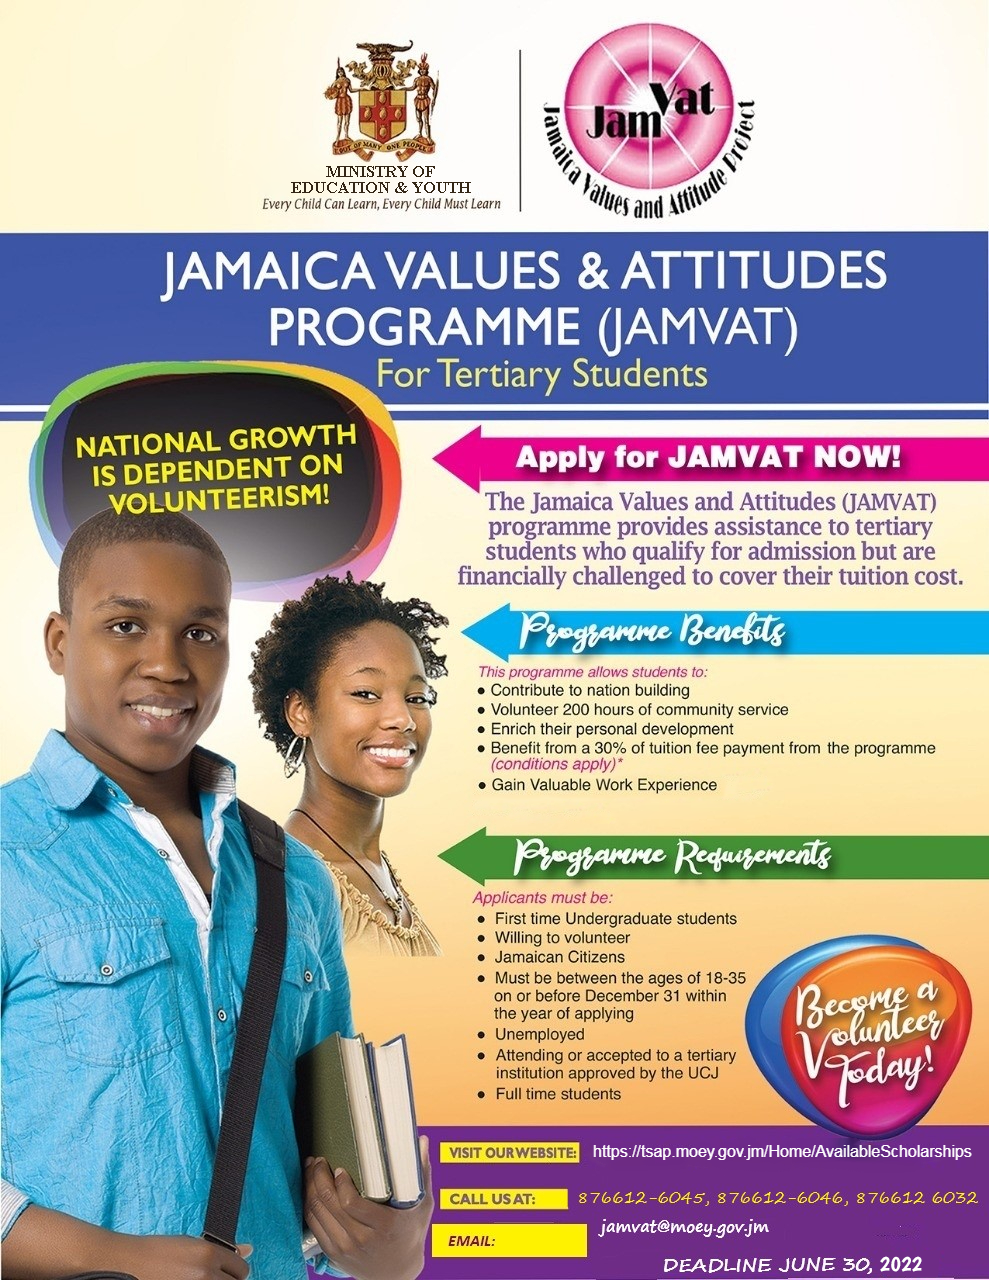 JAMAICA VALUES & ATTITUDE PROGRAMME